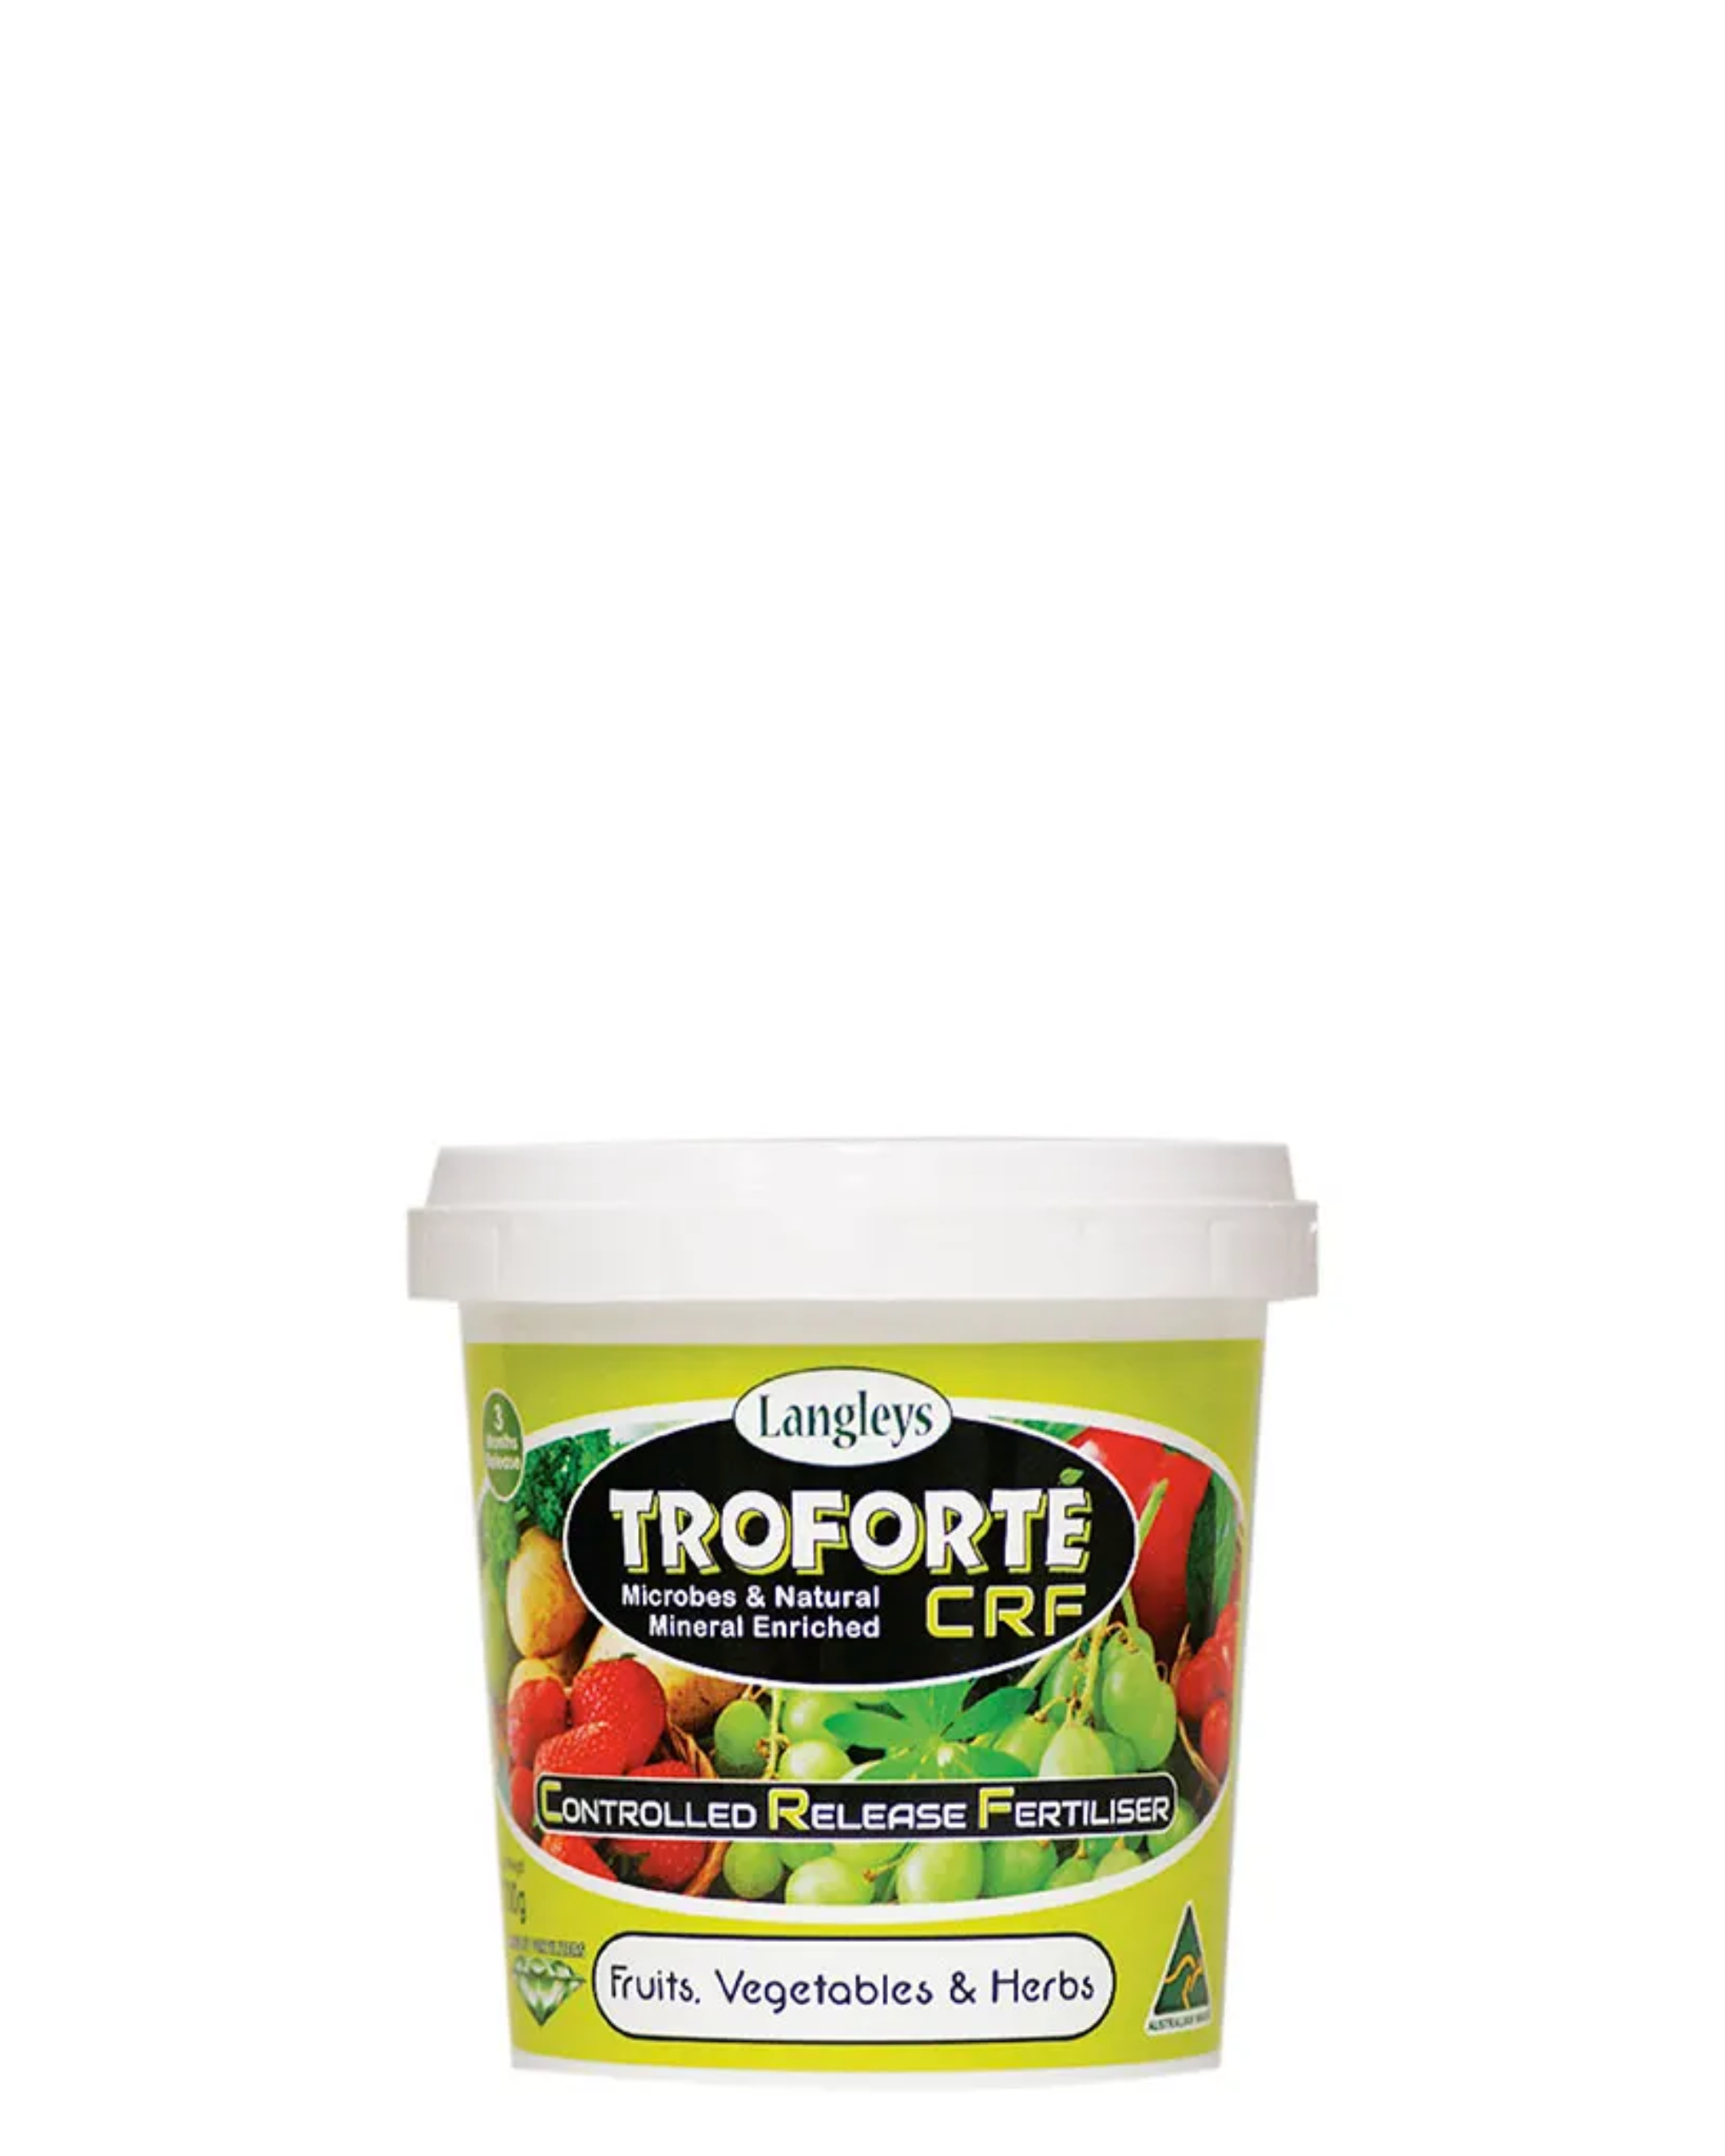 Troforte CRF Fruits Vegetables & Herbs